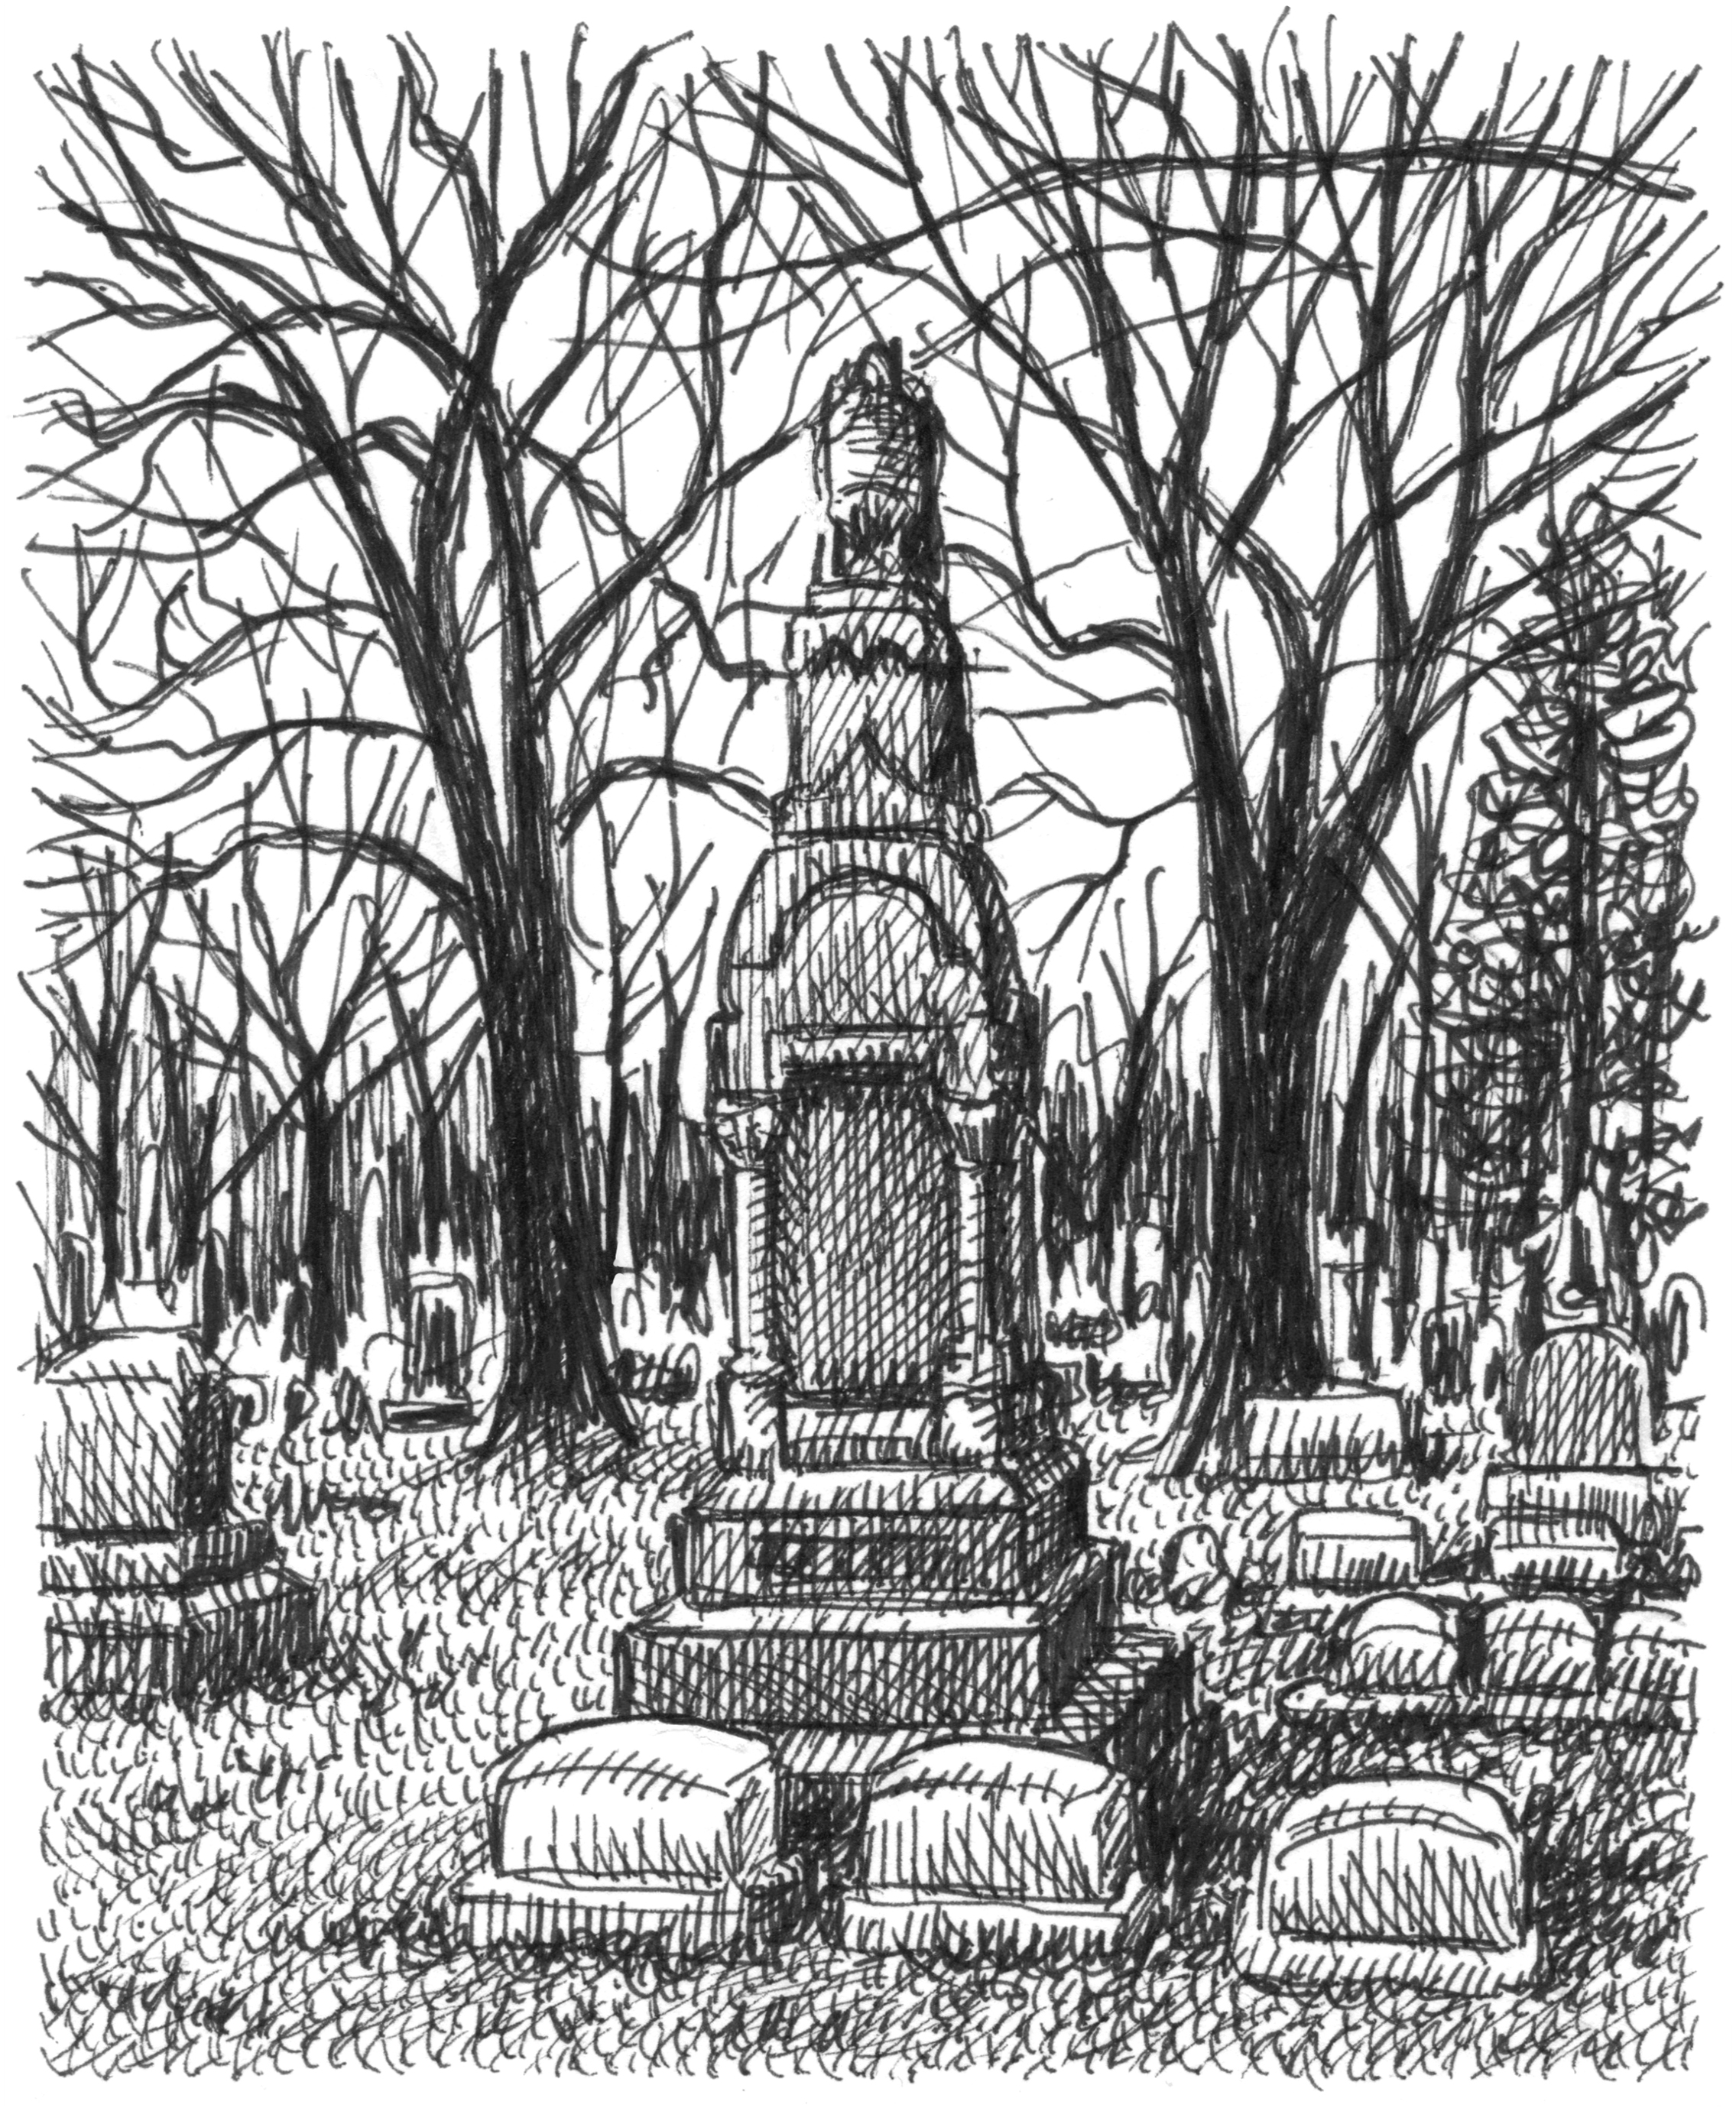 Dr Thedas Crypt The Happy Undertaker  Cemetery art Graveyard  Halloween art